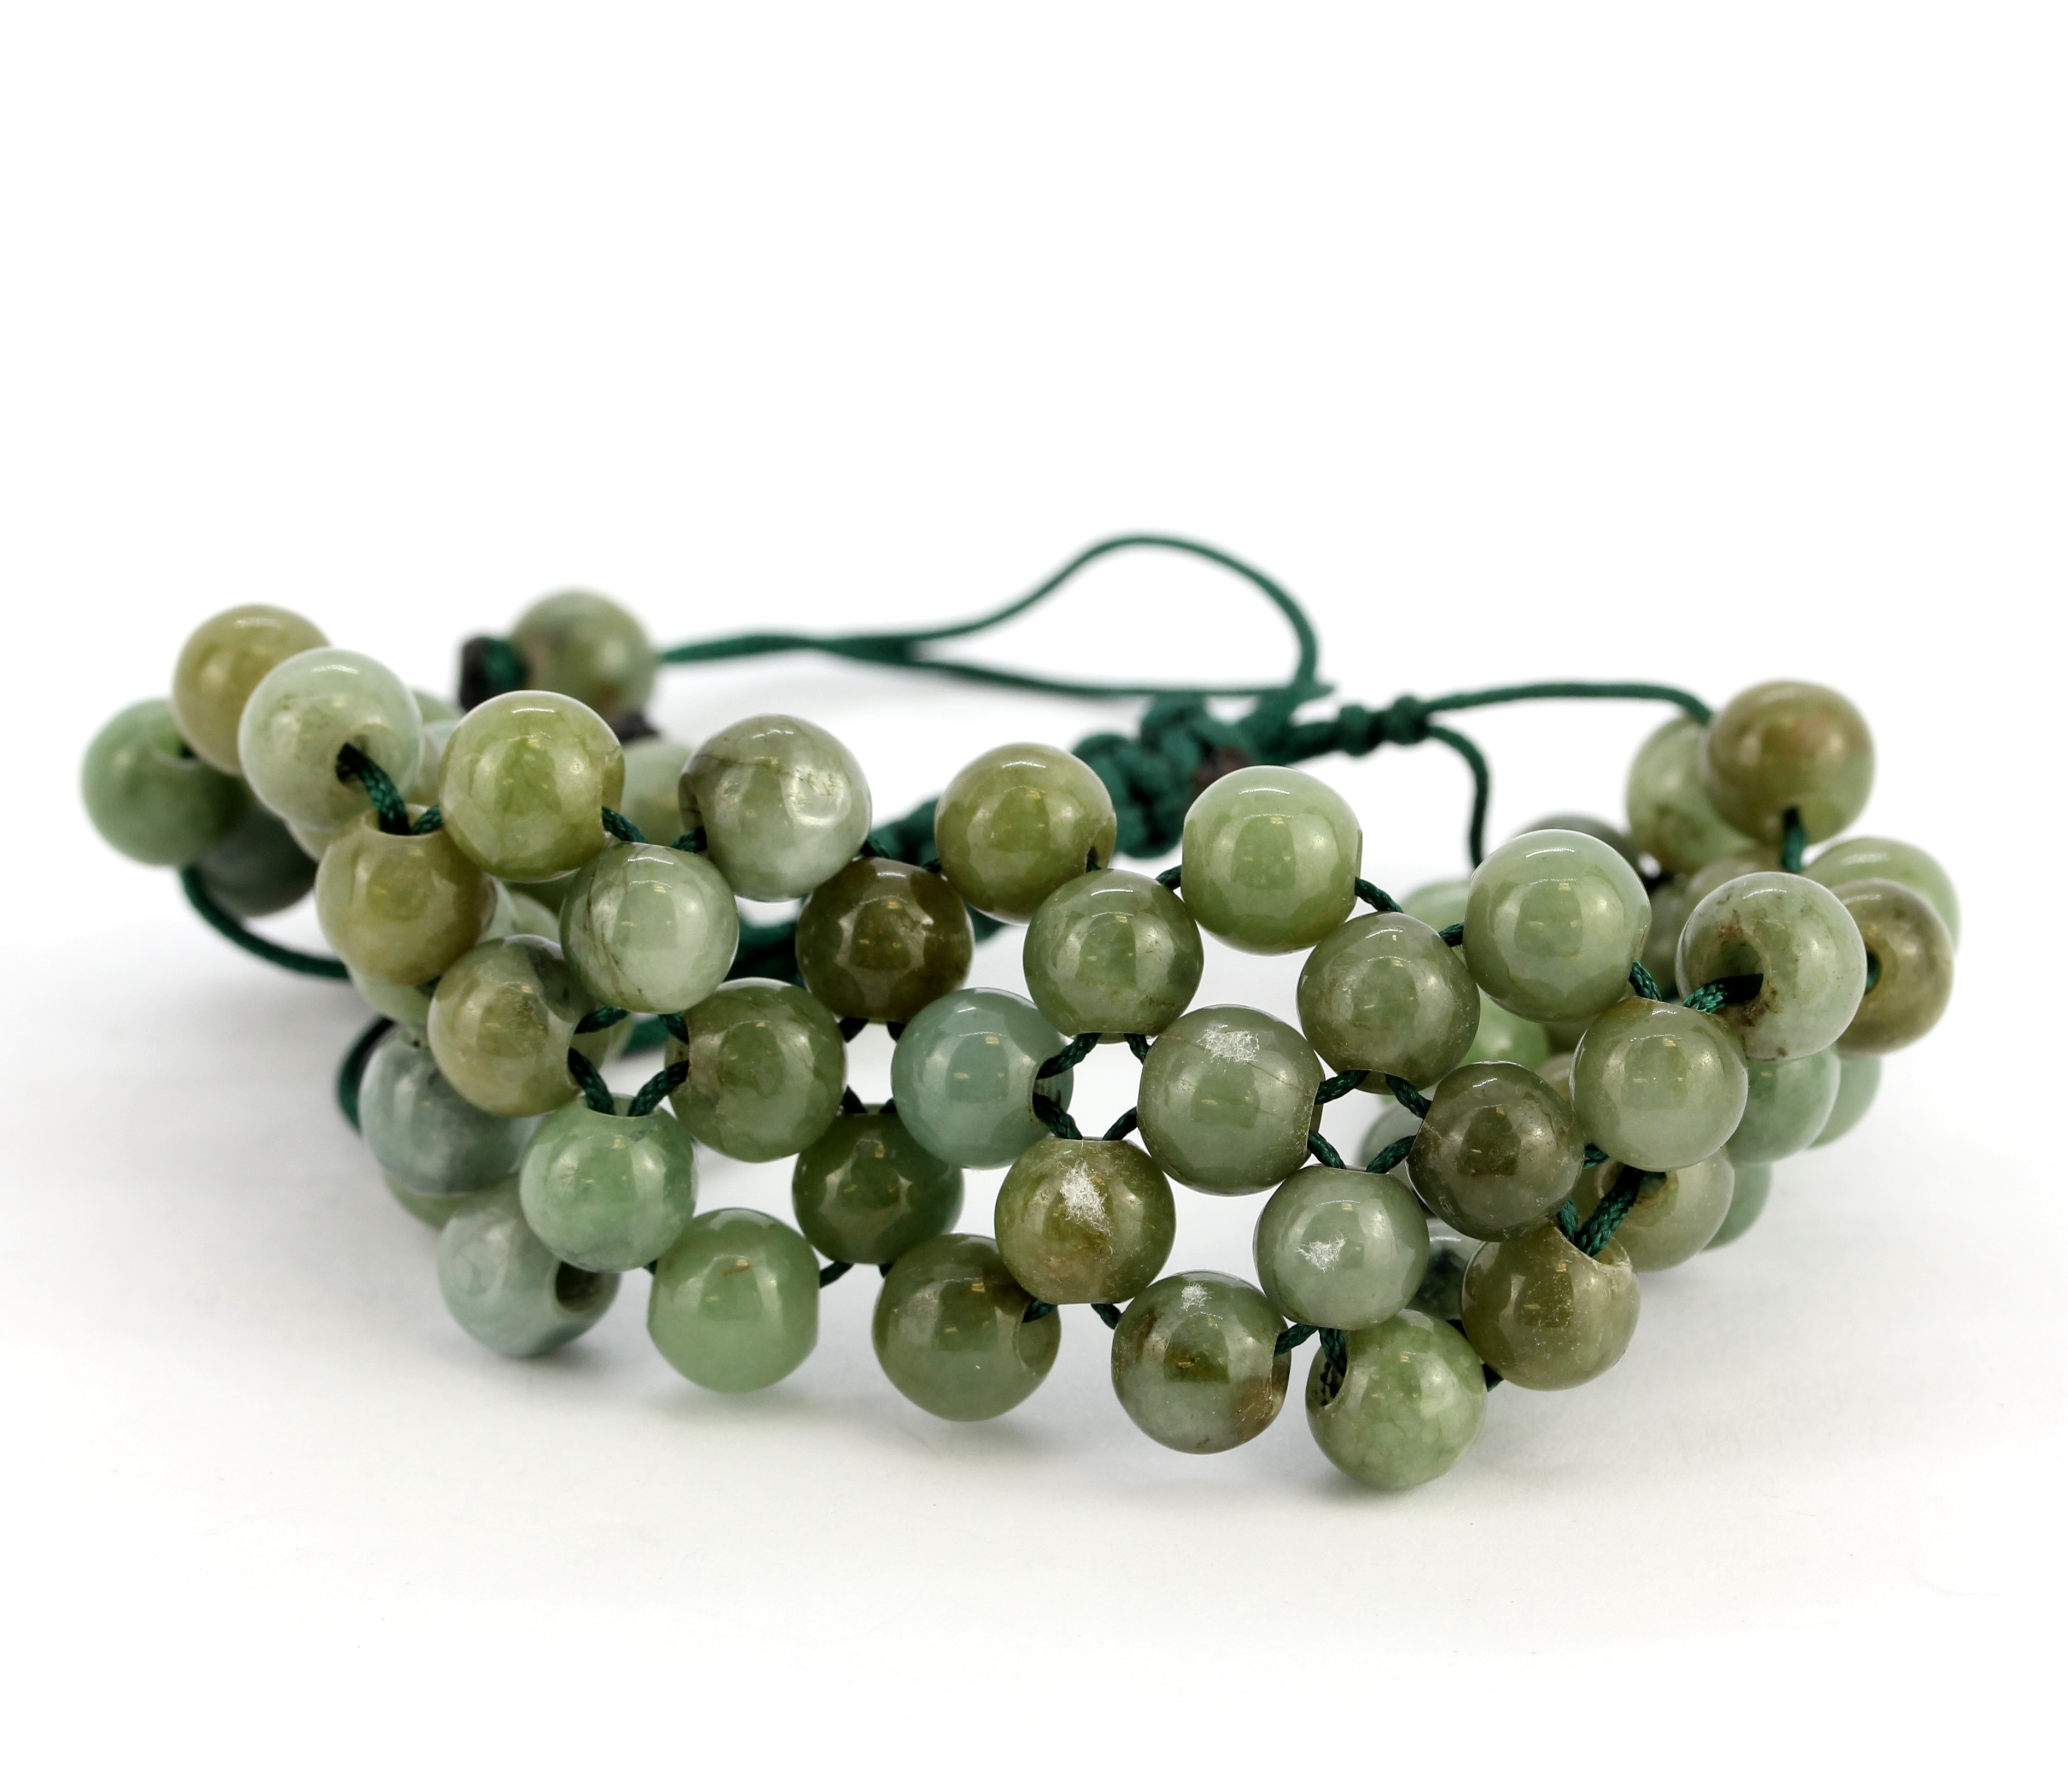 A nephrite jade bead bracelet. - Image 2 of 2